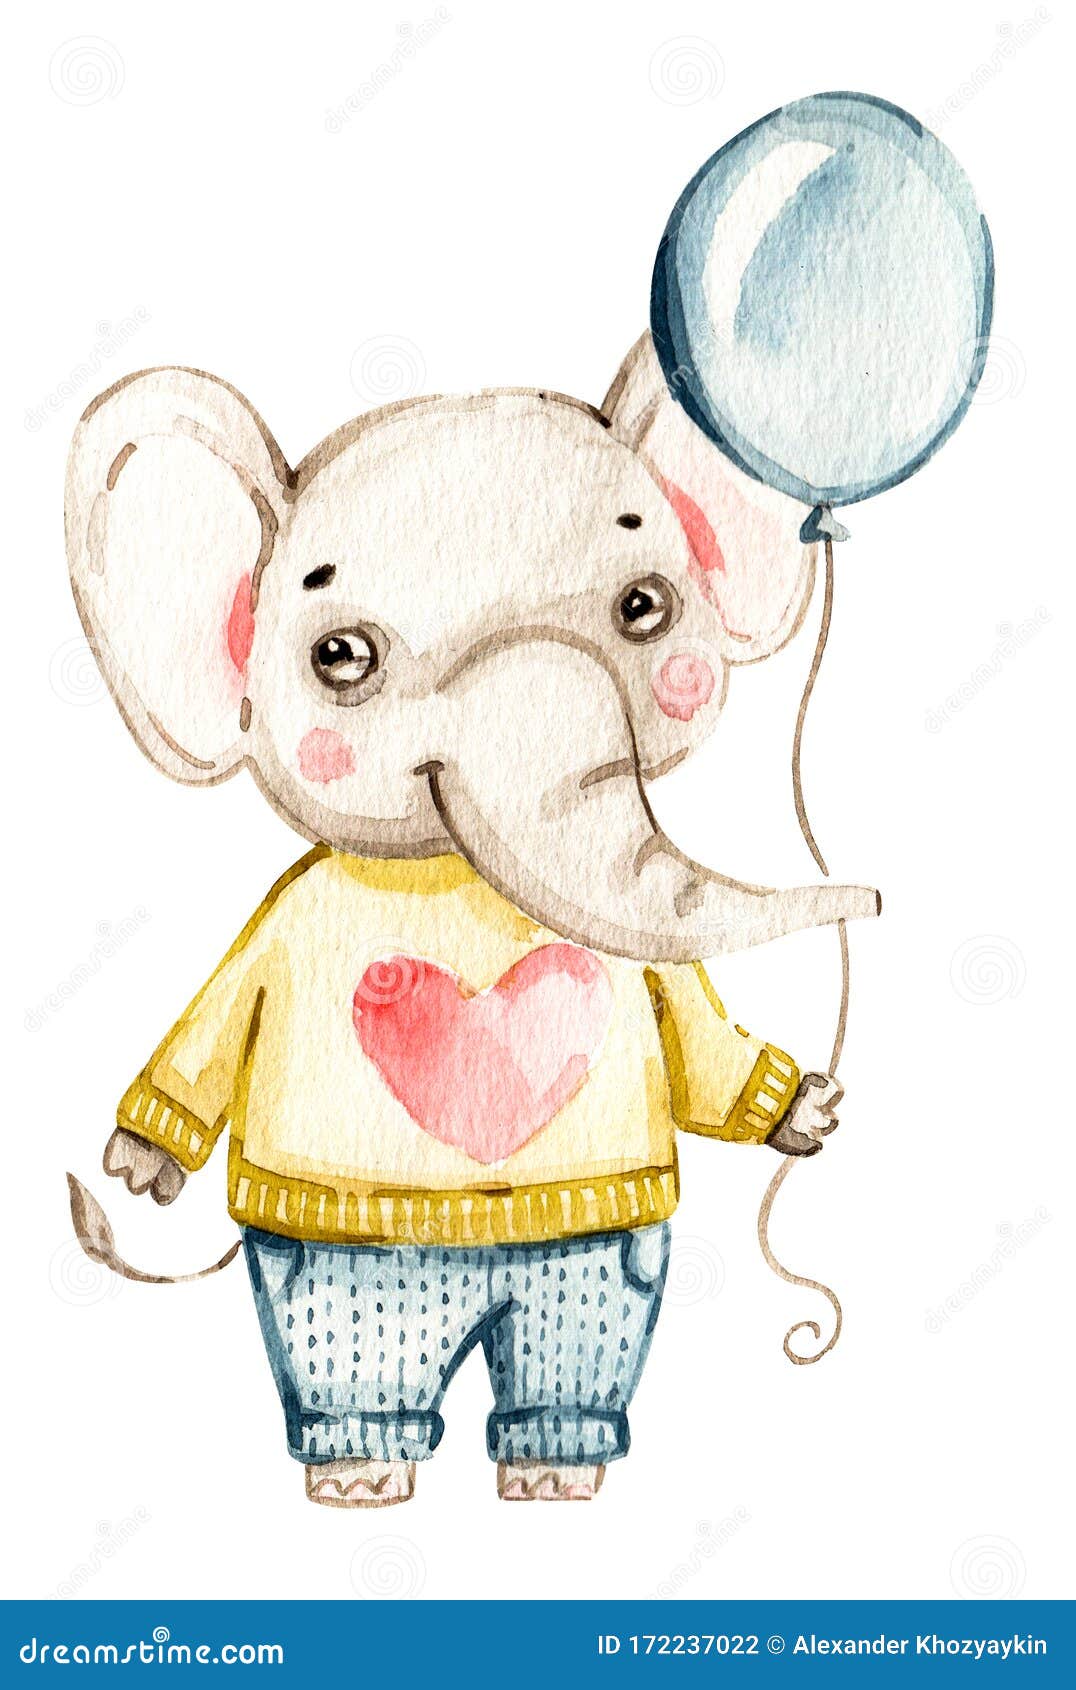 Watercolor Elephant Nursery Decor Baby Elephant With Balloon Nursery Print